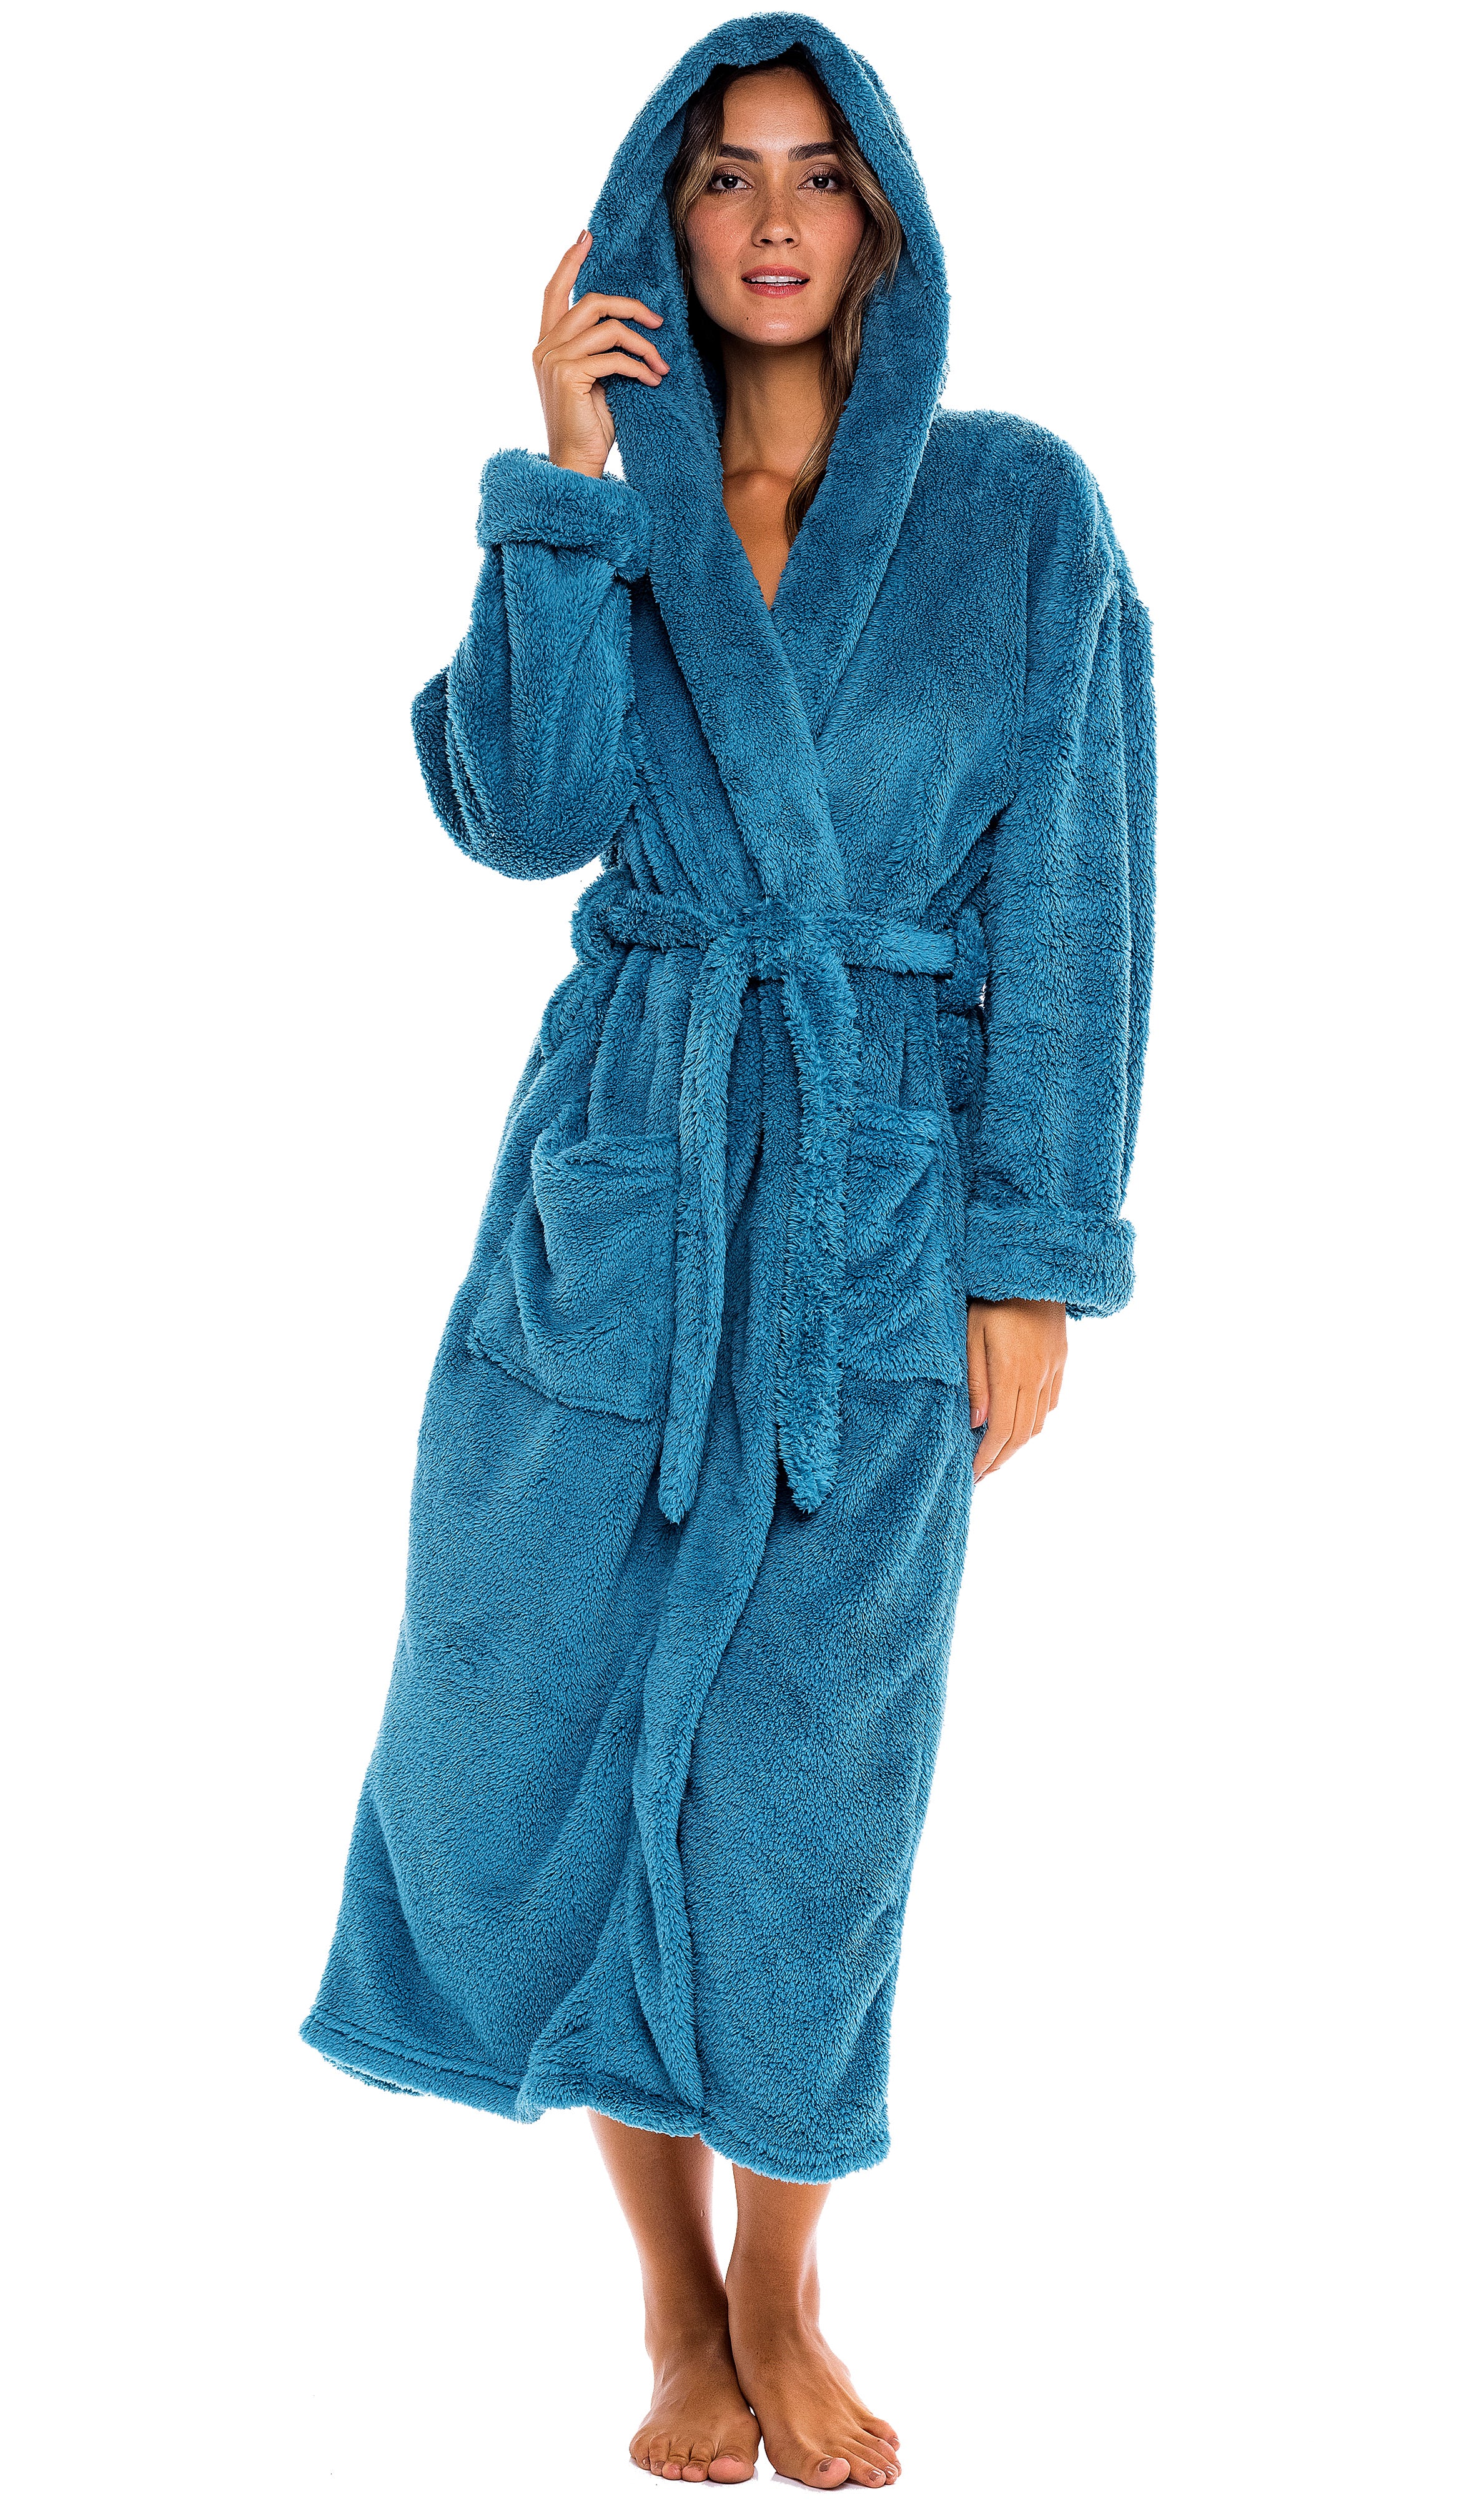 Women's Fuzzy Plush Fleece Bathrobe with Hood, Soft Warm Hooded